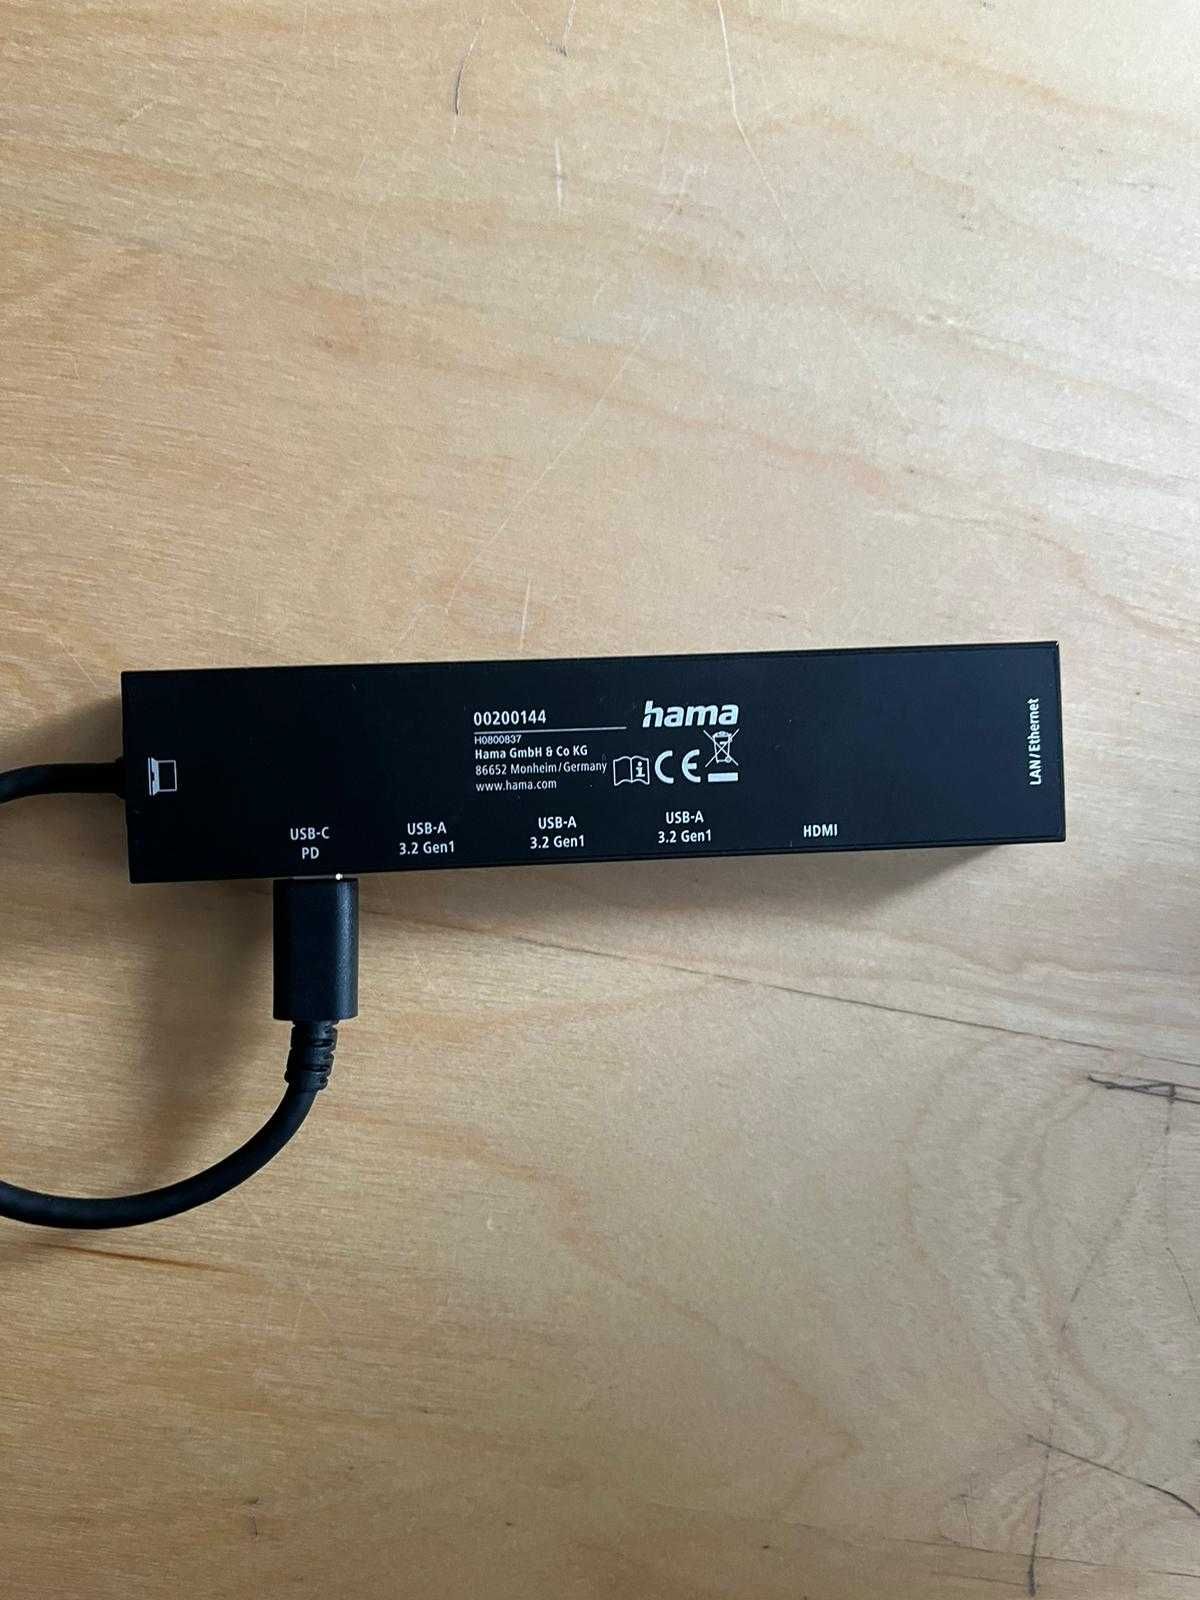 Hama USB-C-Hub, 6 Ports, 3x USB-A, USB-C, HDMI, LAN / Ethernet